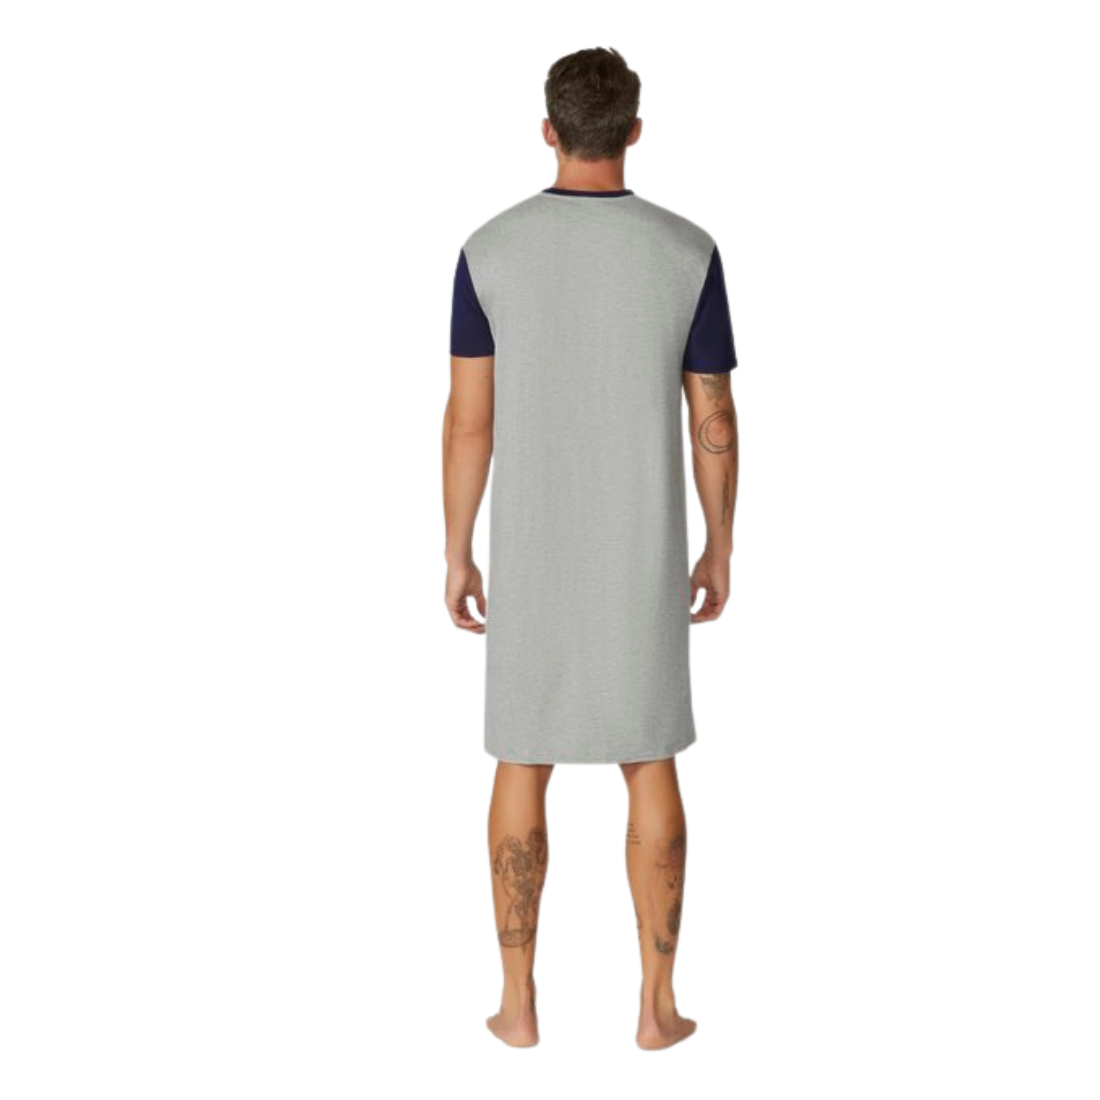 Short Sleeve Bamboo Night Shirt - Navy/Grey Navy/Grey Mens Sleepwear by Contare | The Bloke Shop